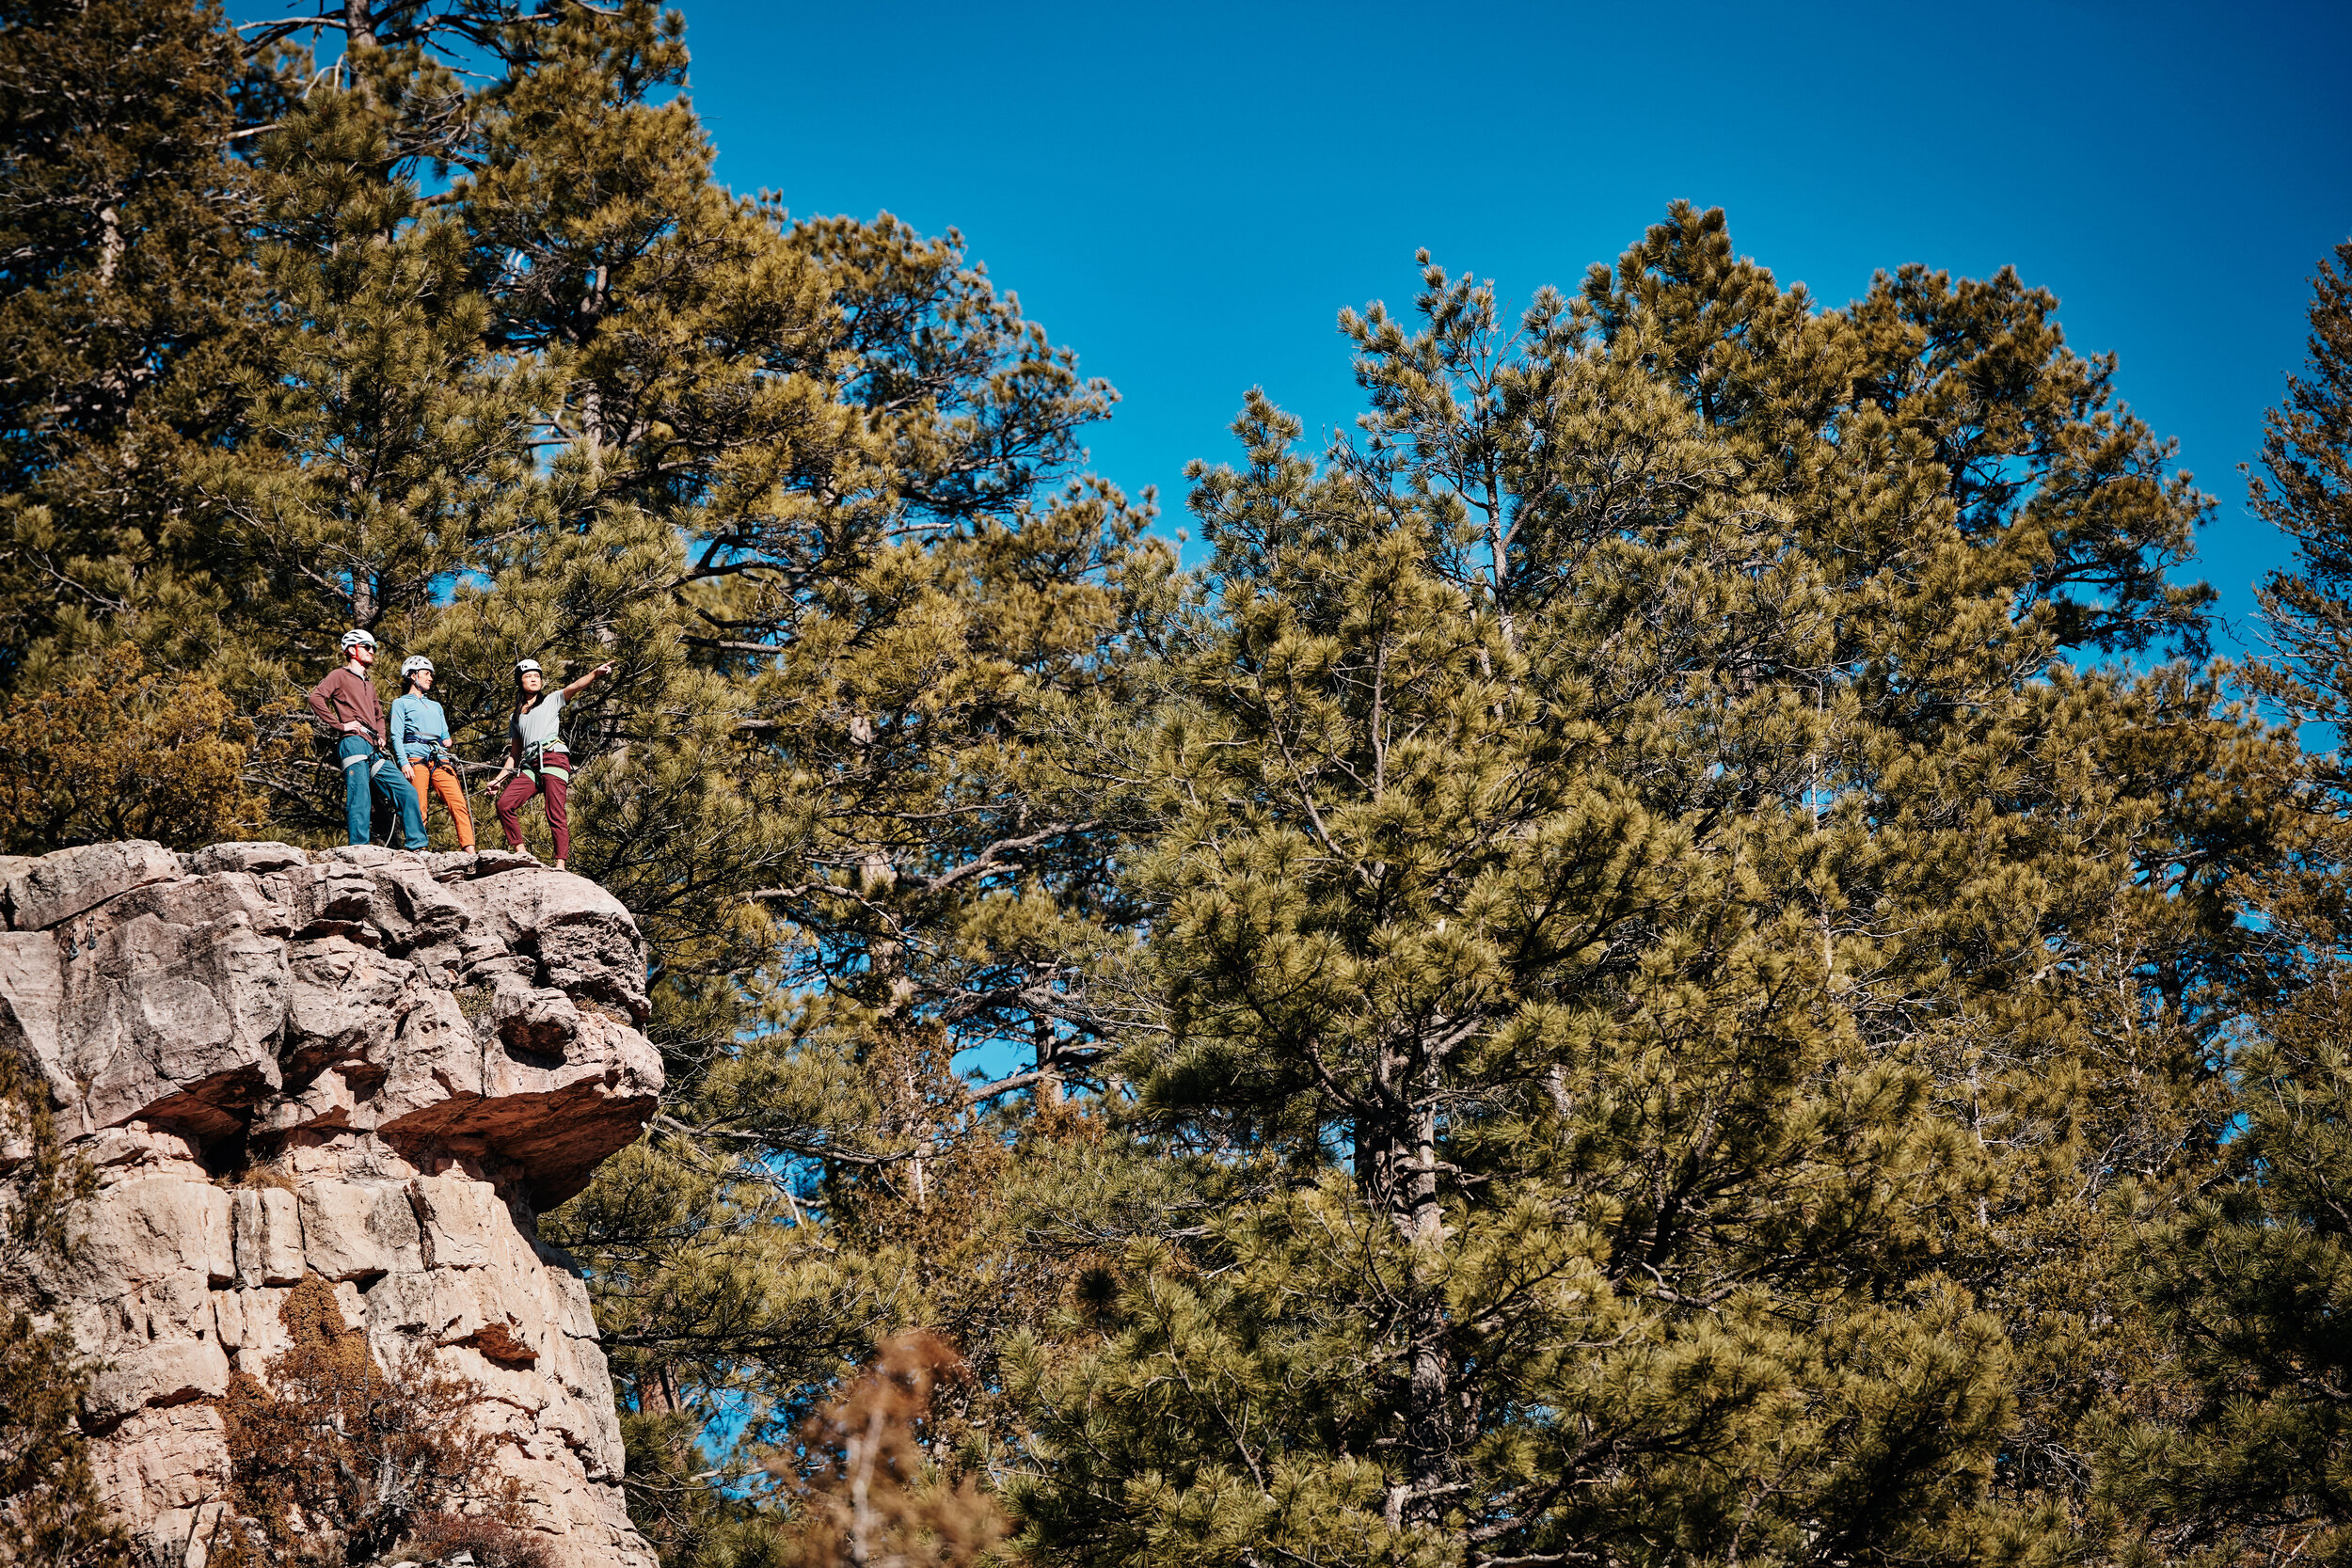   Backcountry Gear &amp; Apparel SS ’20    Pursuits : Mountain Biking, Rock Climbing, Hiking, and Camping   Location : Sedona, AZ   Producer : Tyler Arrivillaga   Photographer : Jordan Haggard 